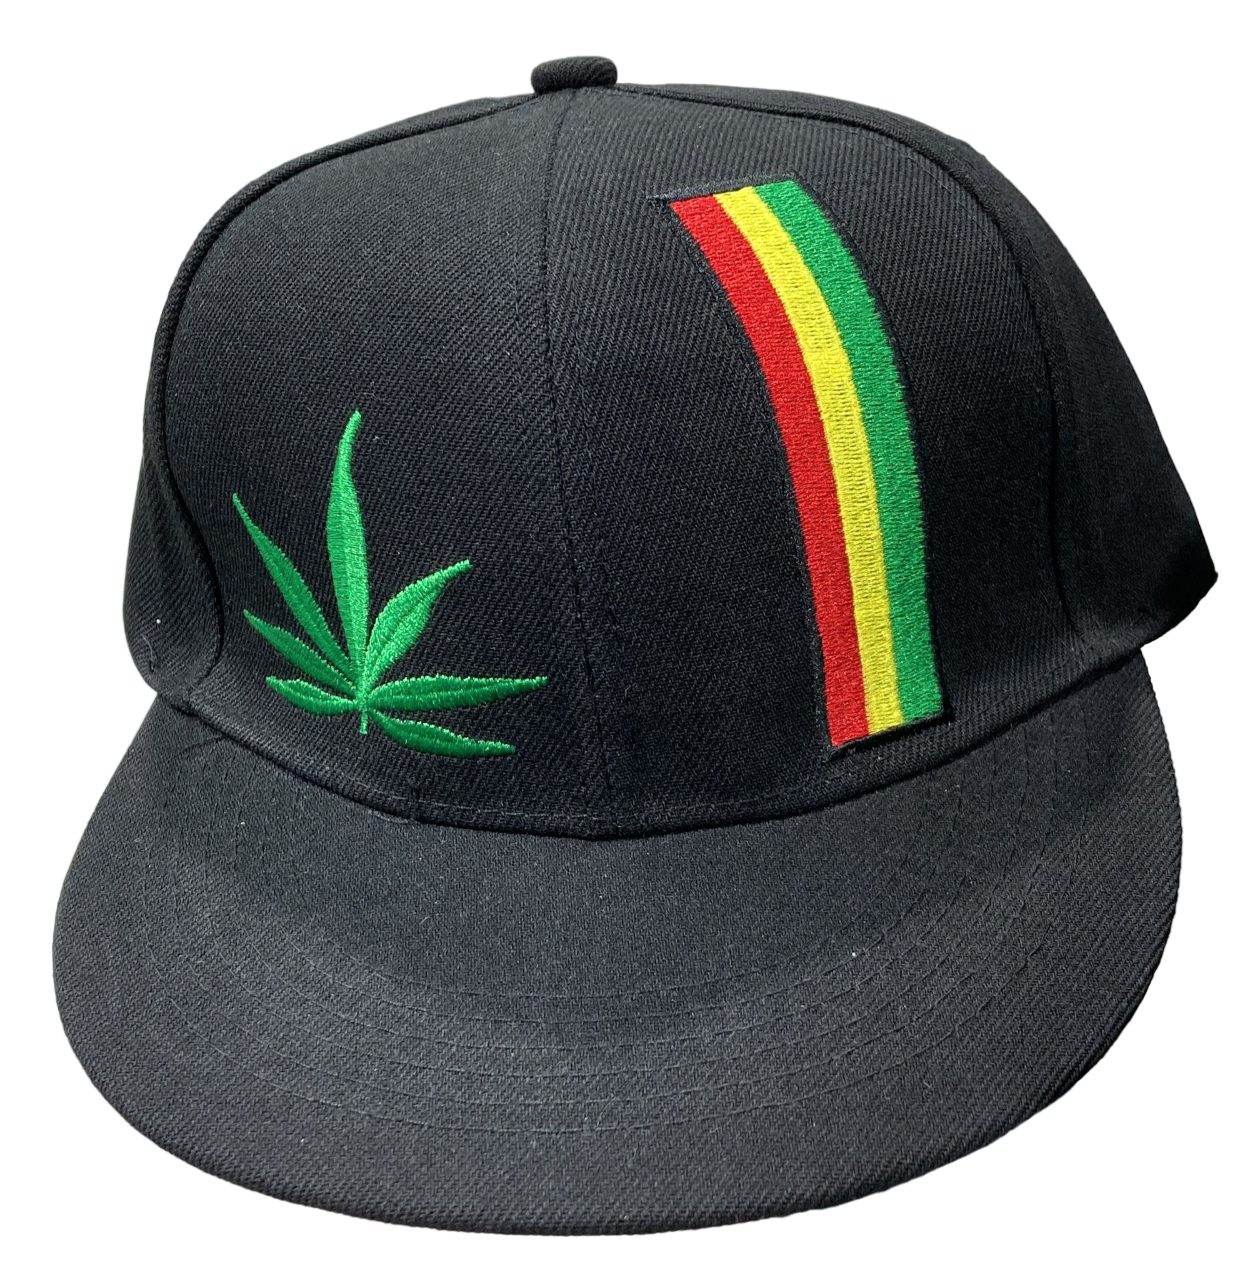 Adjustable Baseball Hat - Marijuana and Rasta Patch (Solid Black) - MK Distro